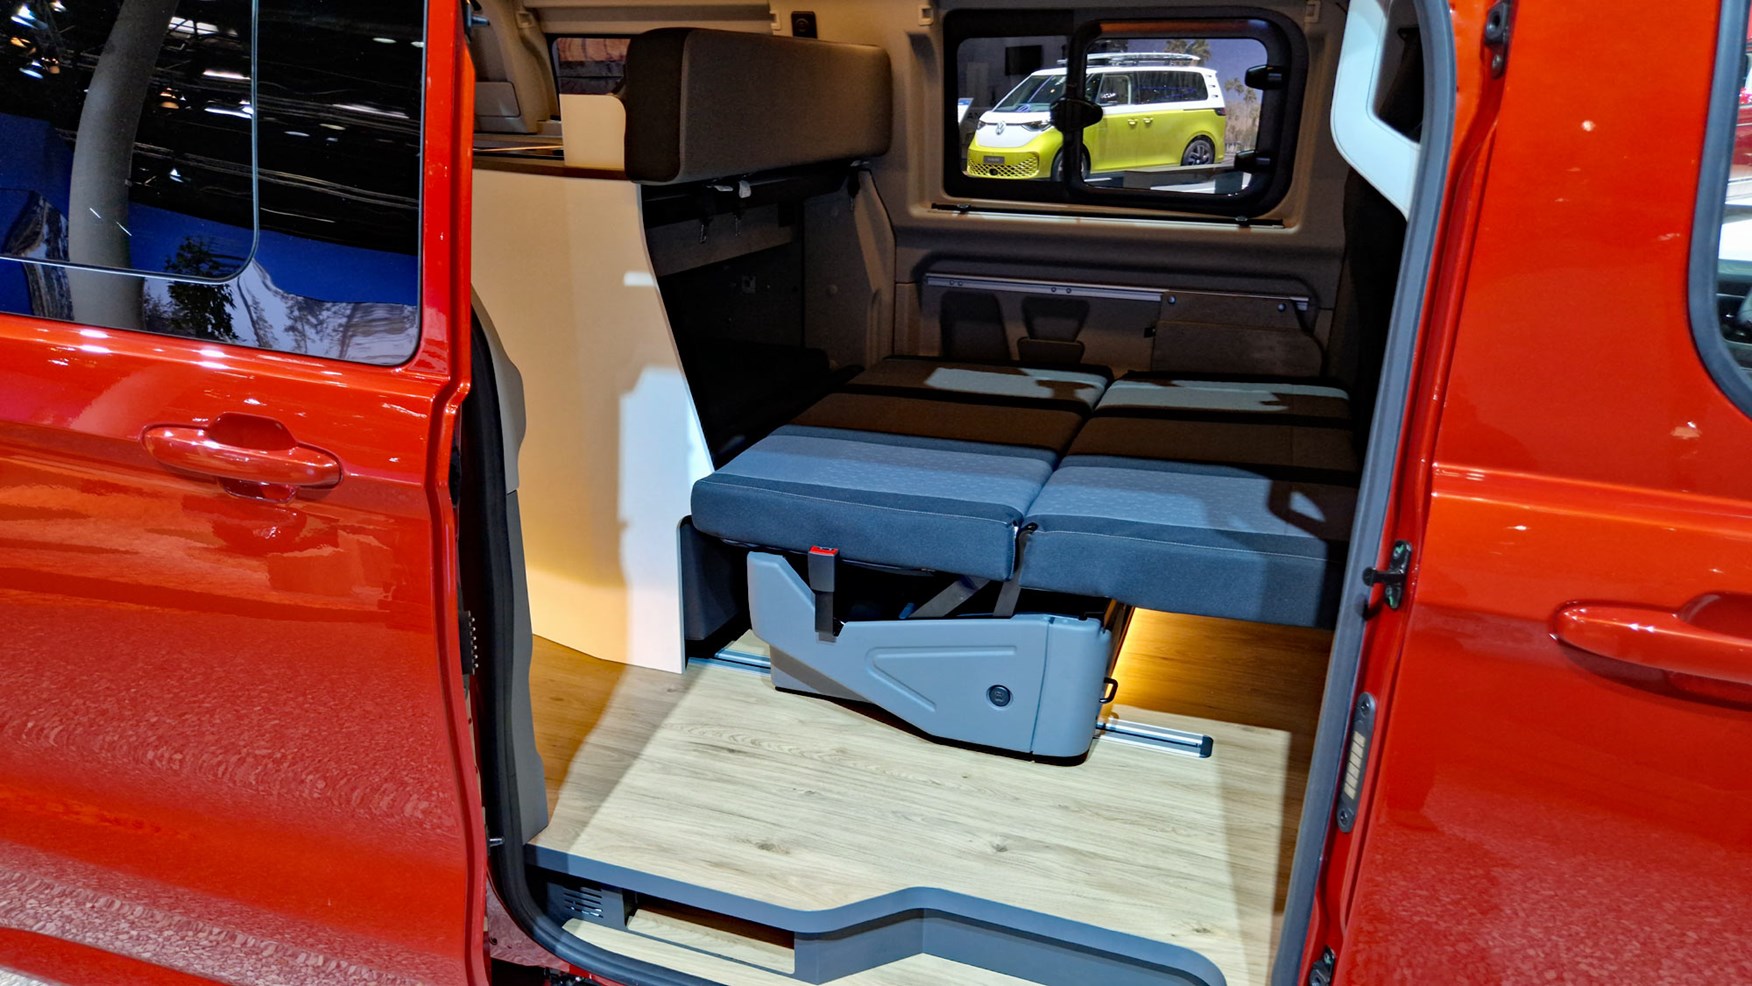 Interior of New Ford Transit Custom Revealed